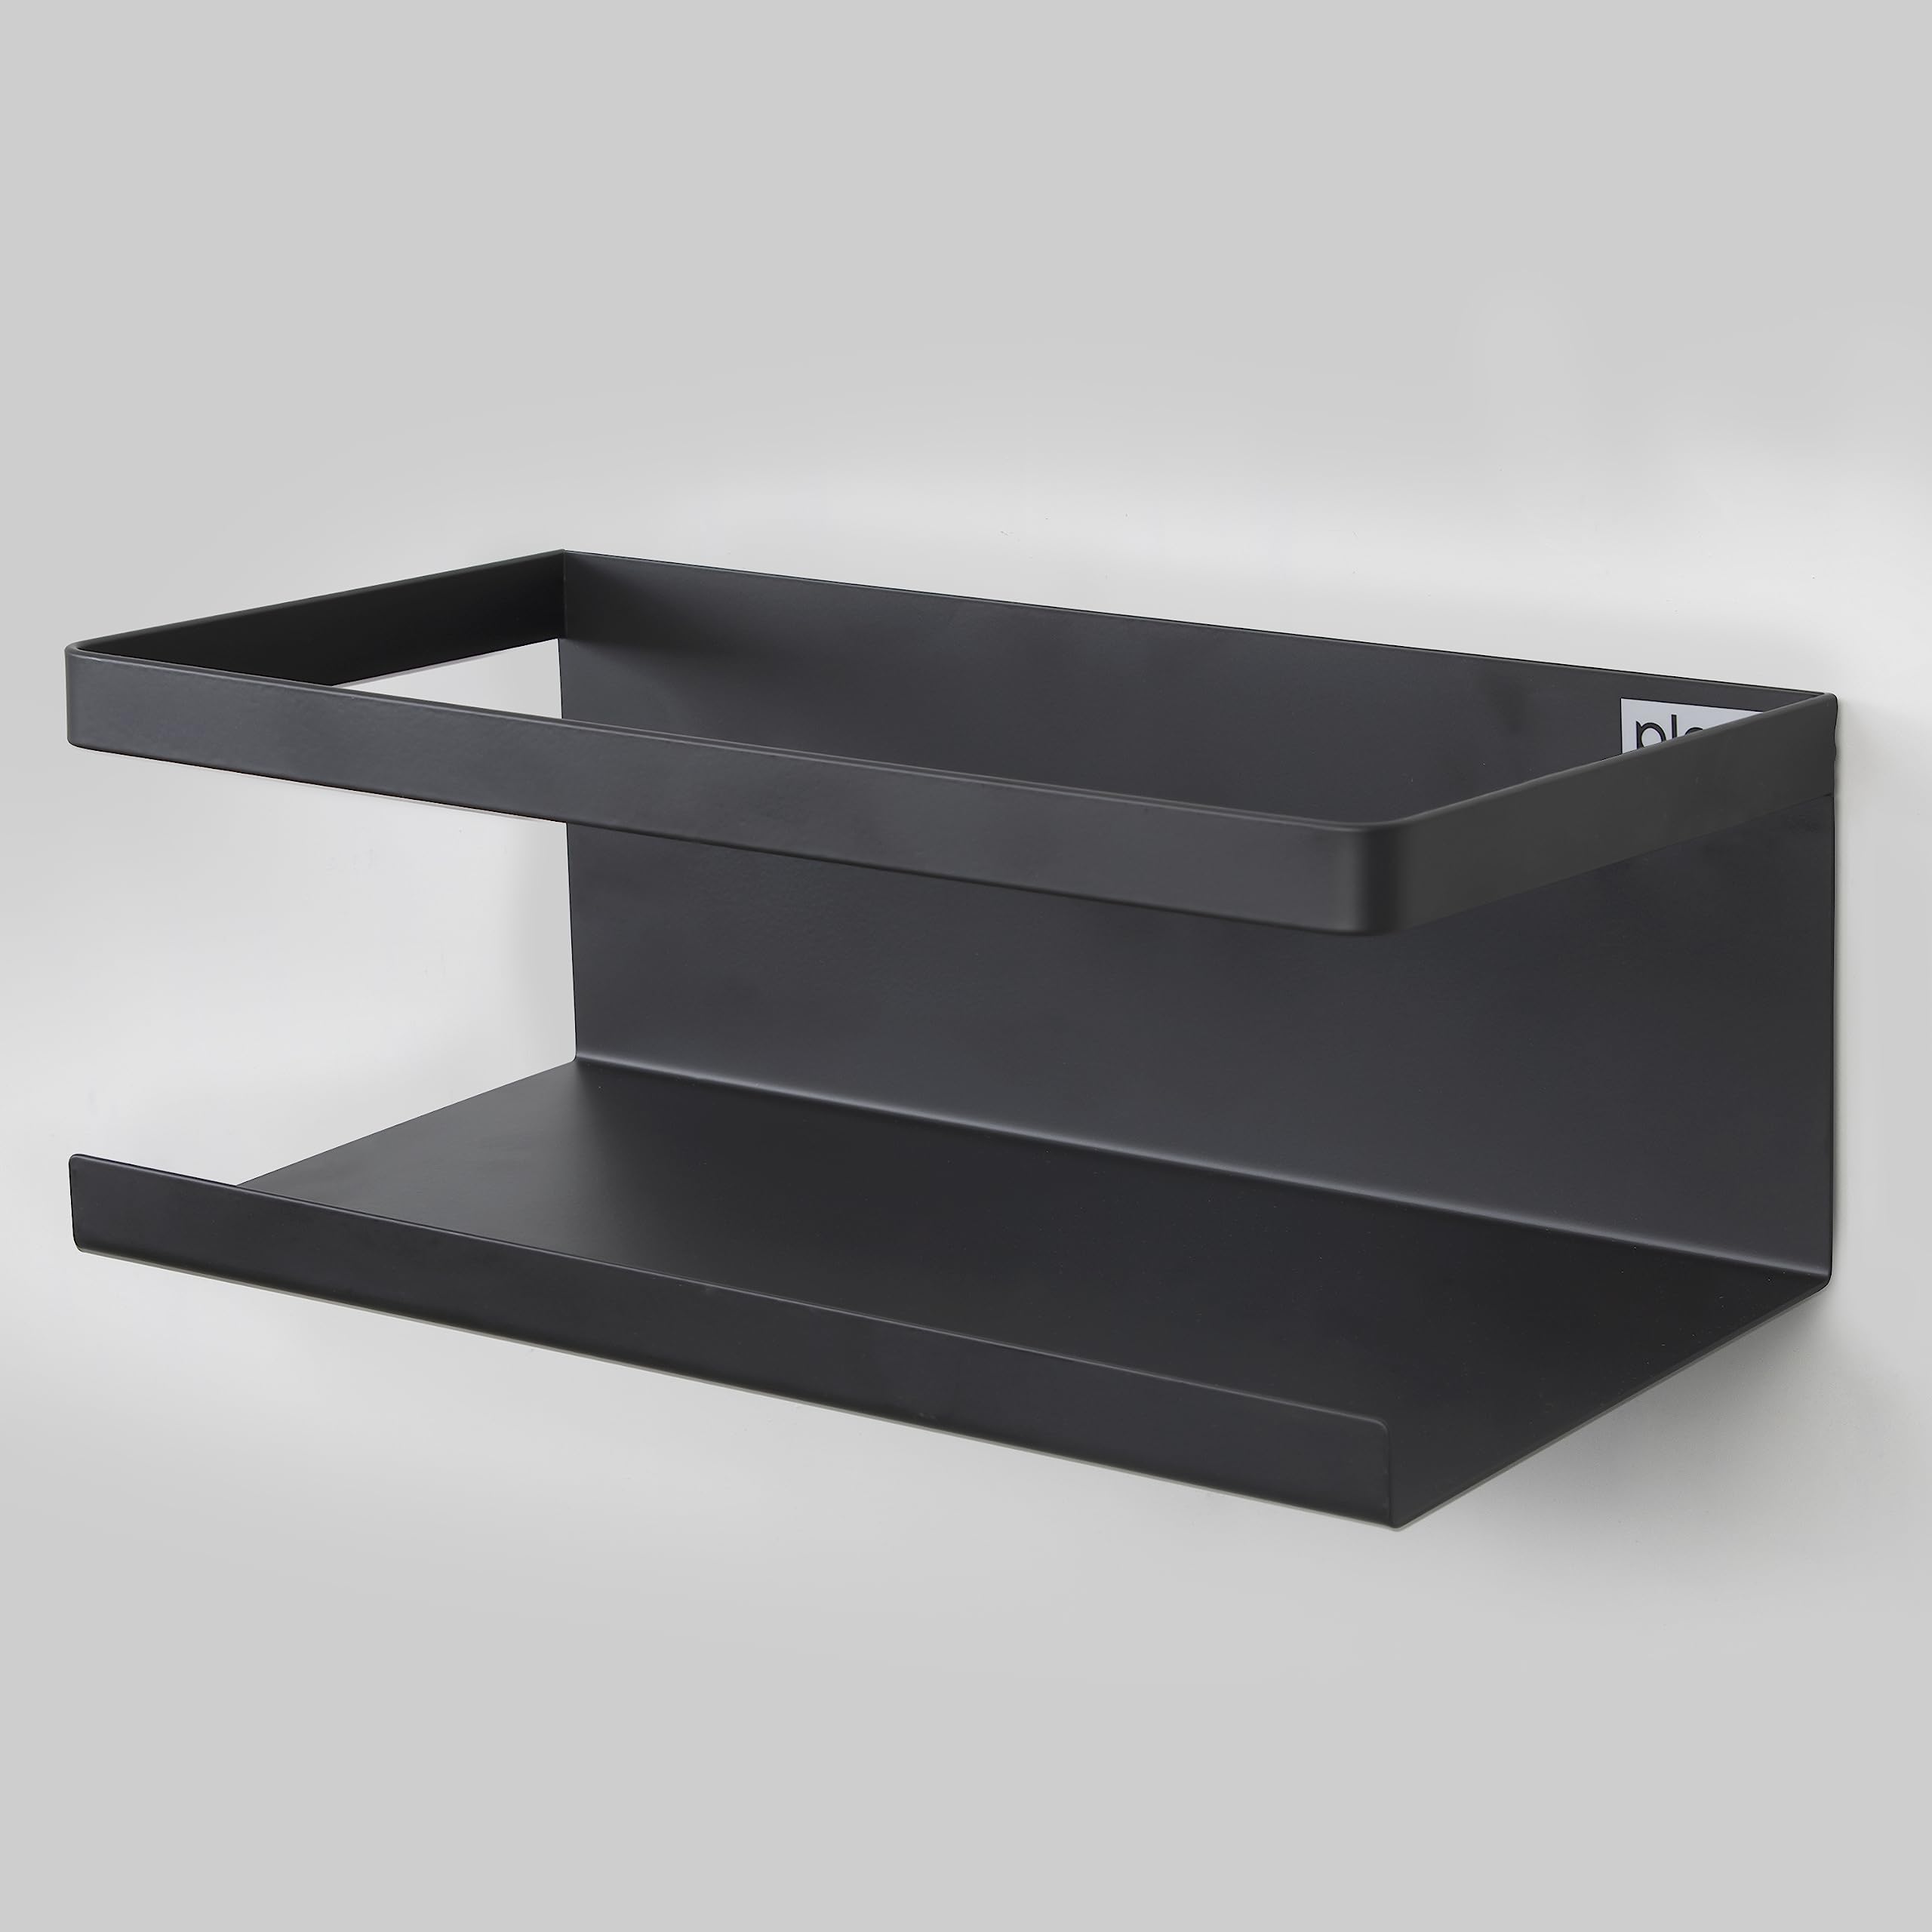 Plantex Magnetic Shelf for Kitchen/Fridge Organizer Spice Rack/Shelf for Refrigerator/Spice Rack for Kitchen - (Black)